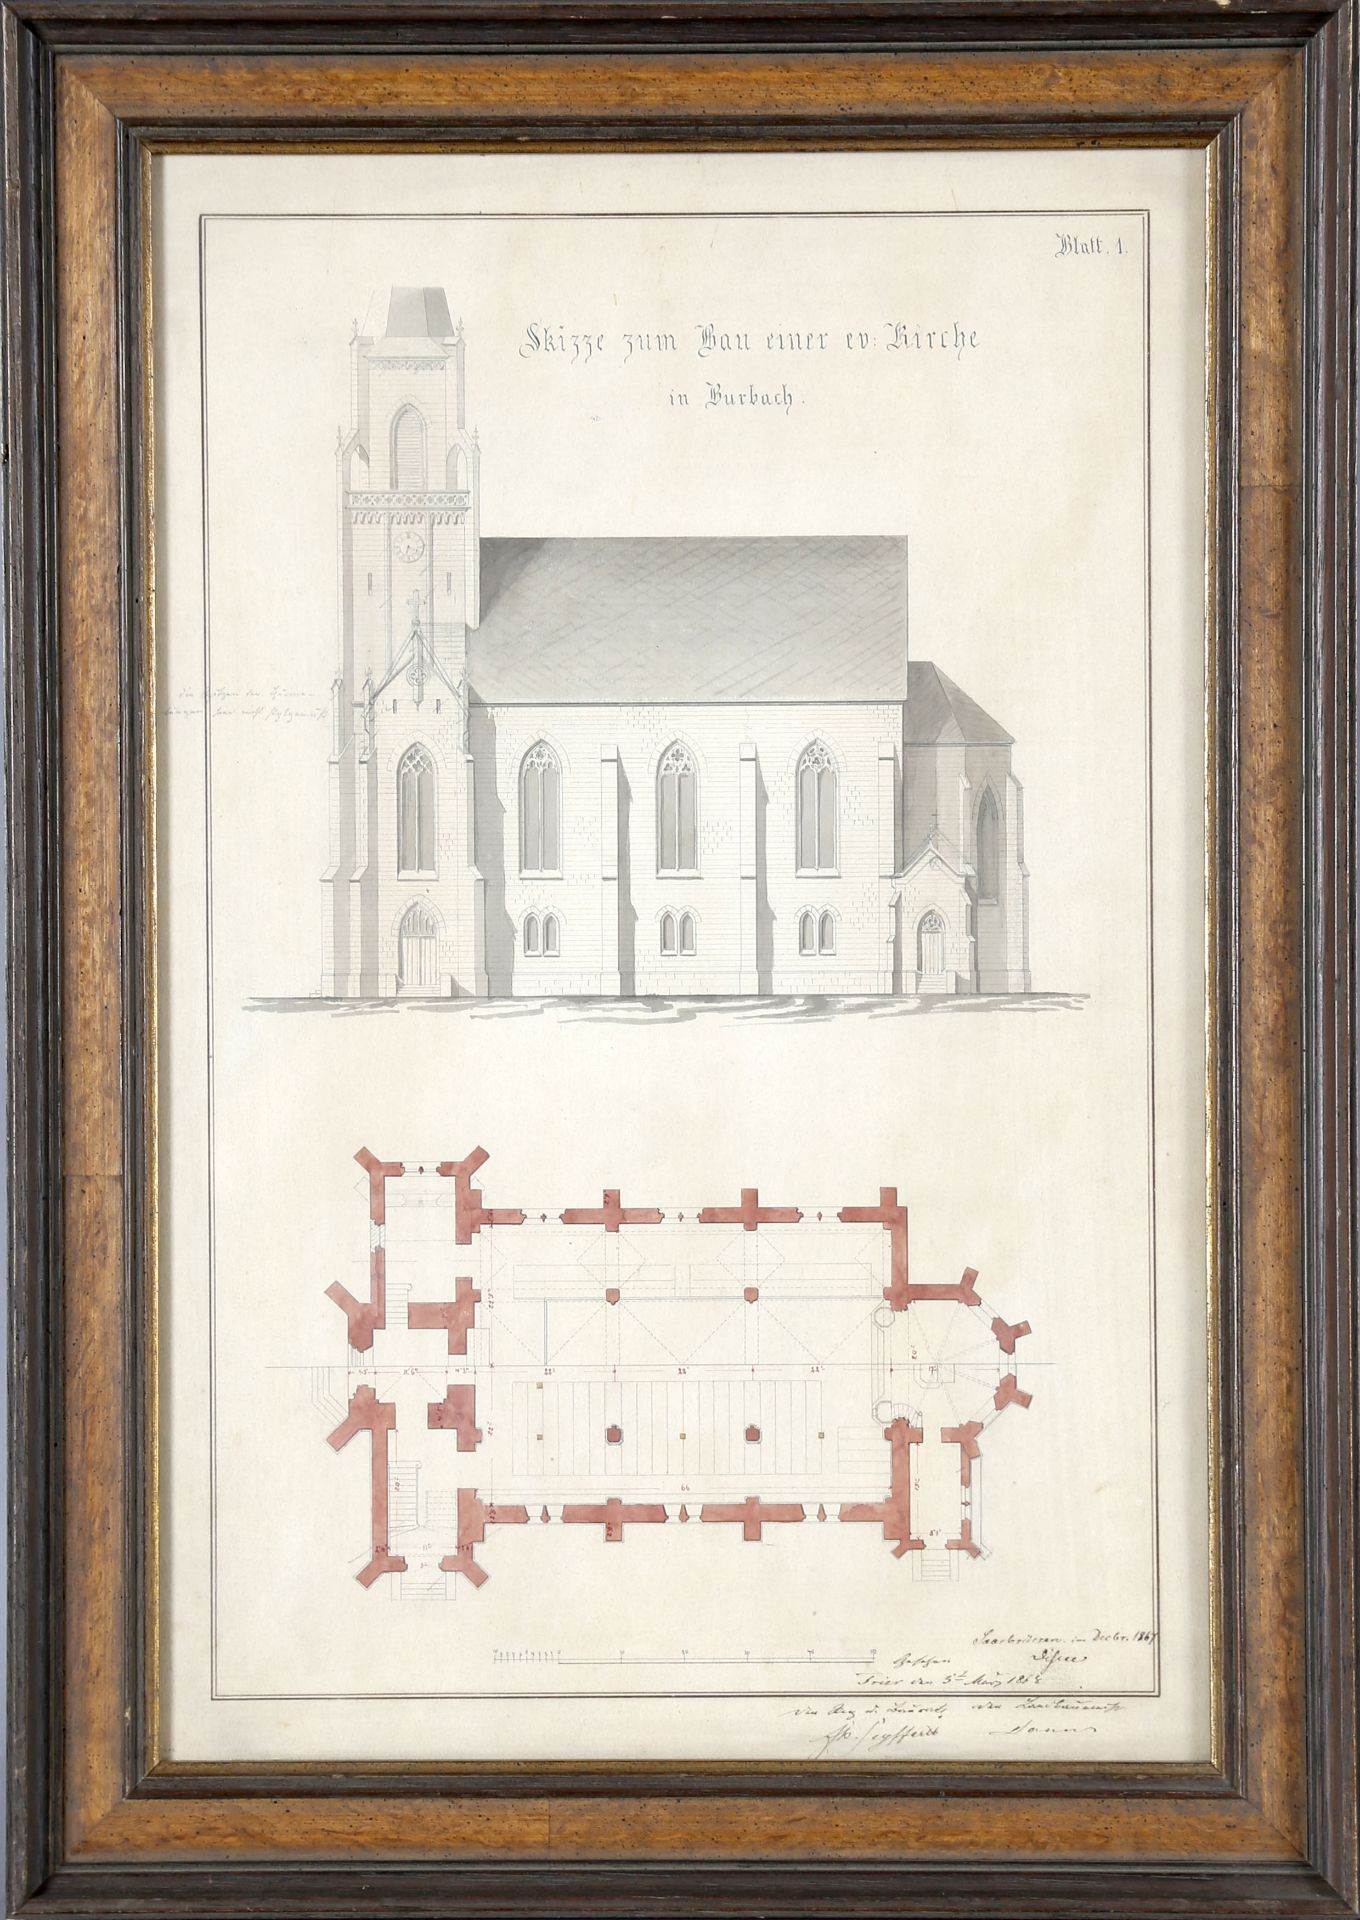 'Skizze zum Bau einer ev. Kirche in Burbach - Blatt 1', 1867